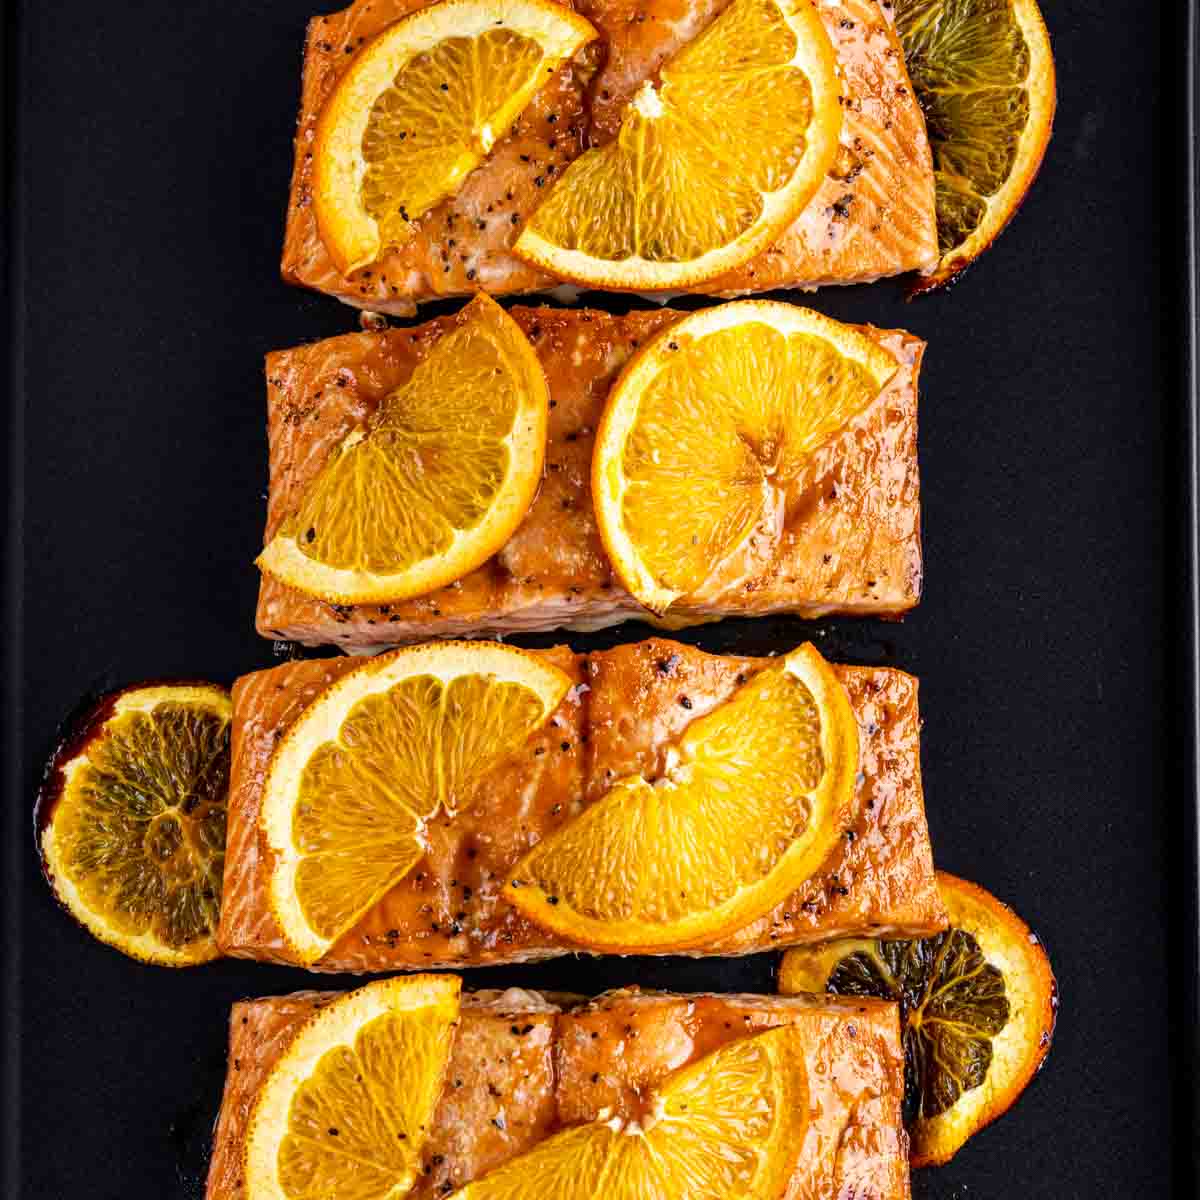 Four pieces of Orange Glazed Salmon topped with orange slices on a black surface.